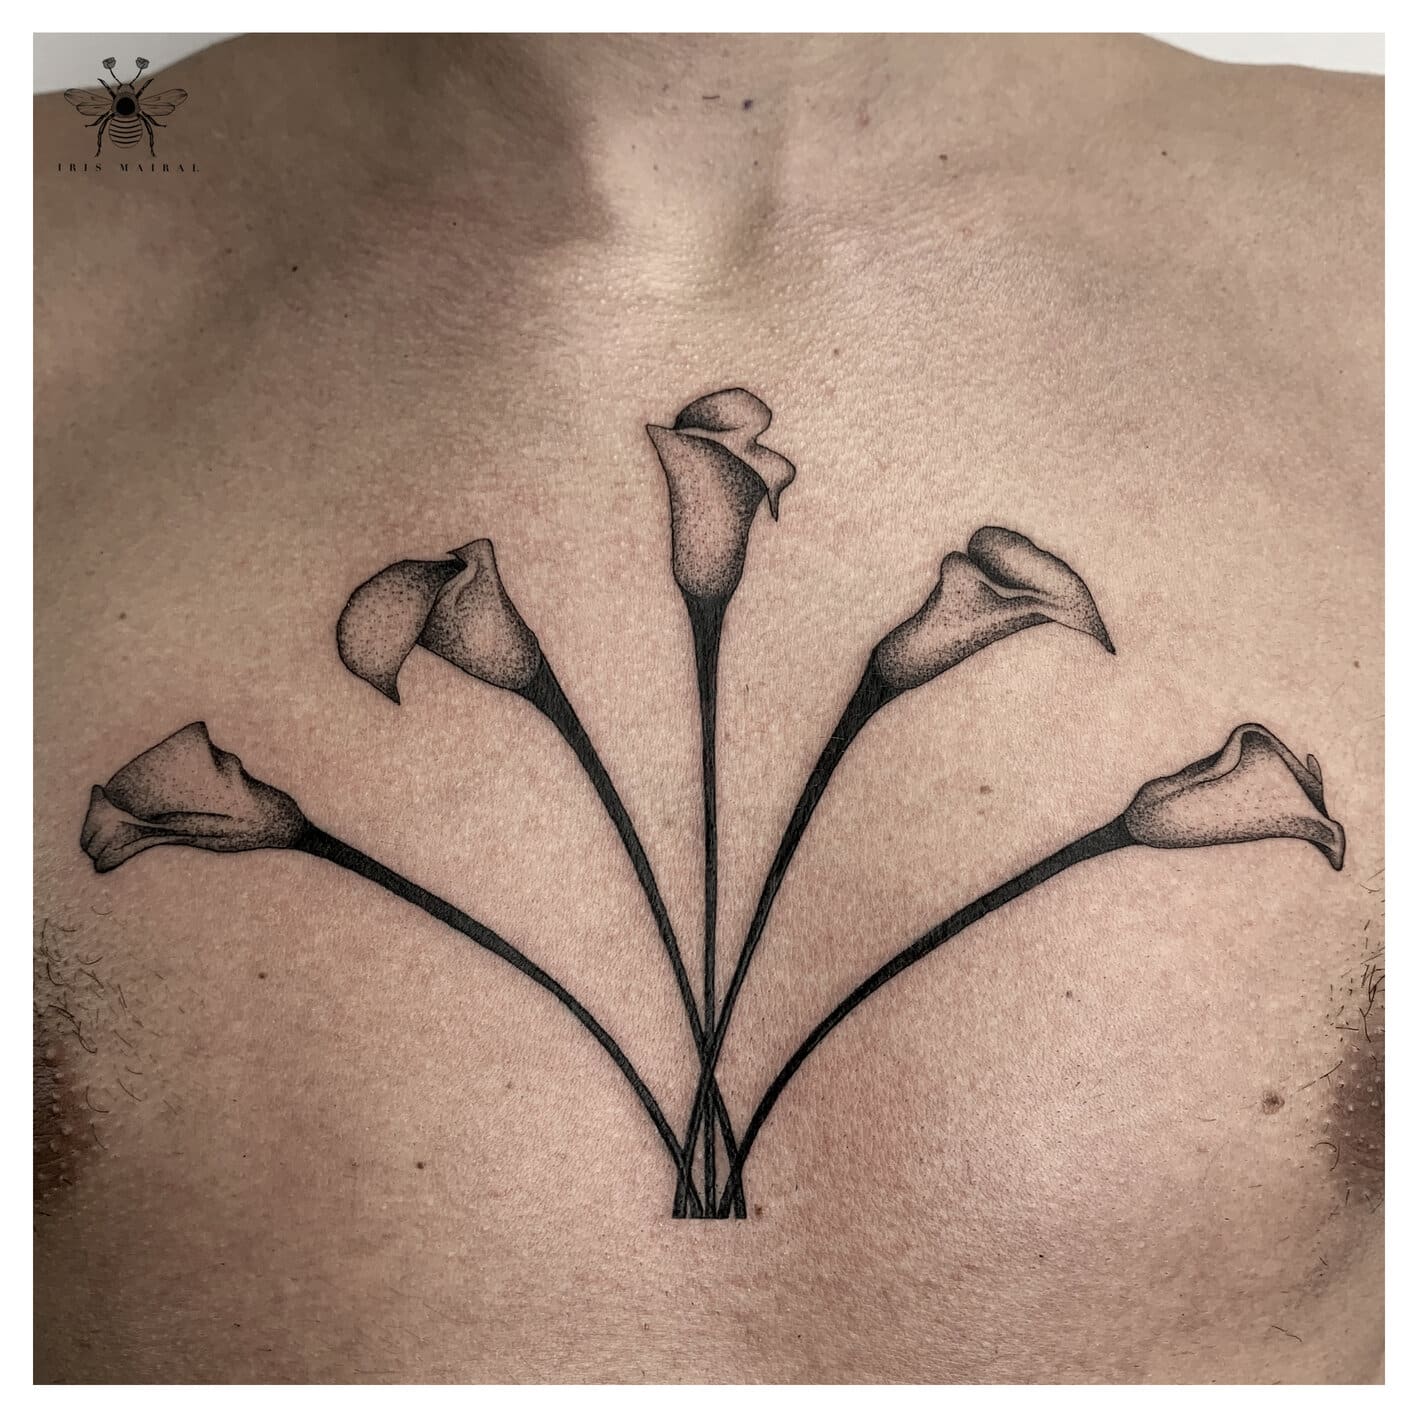 iris-mairal-tattoo-artist-flowers-chest-blackwork